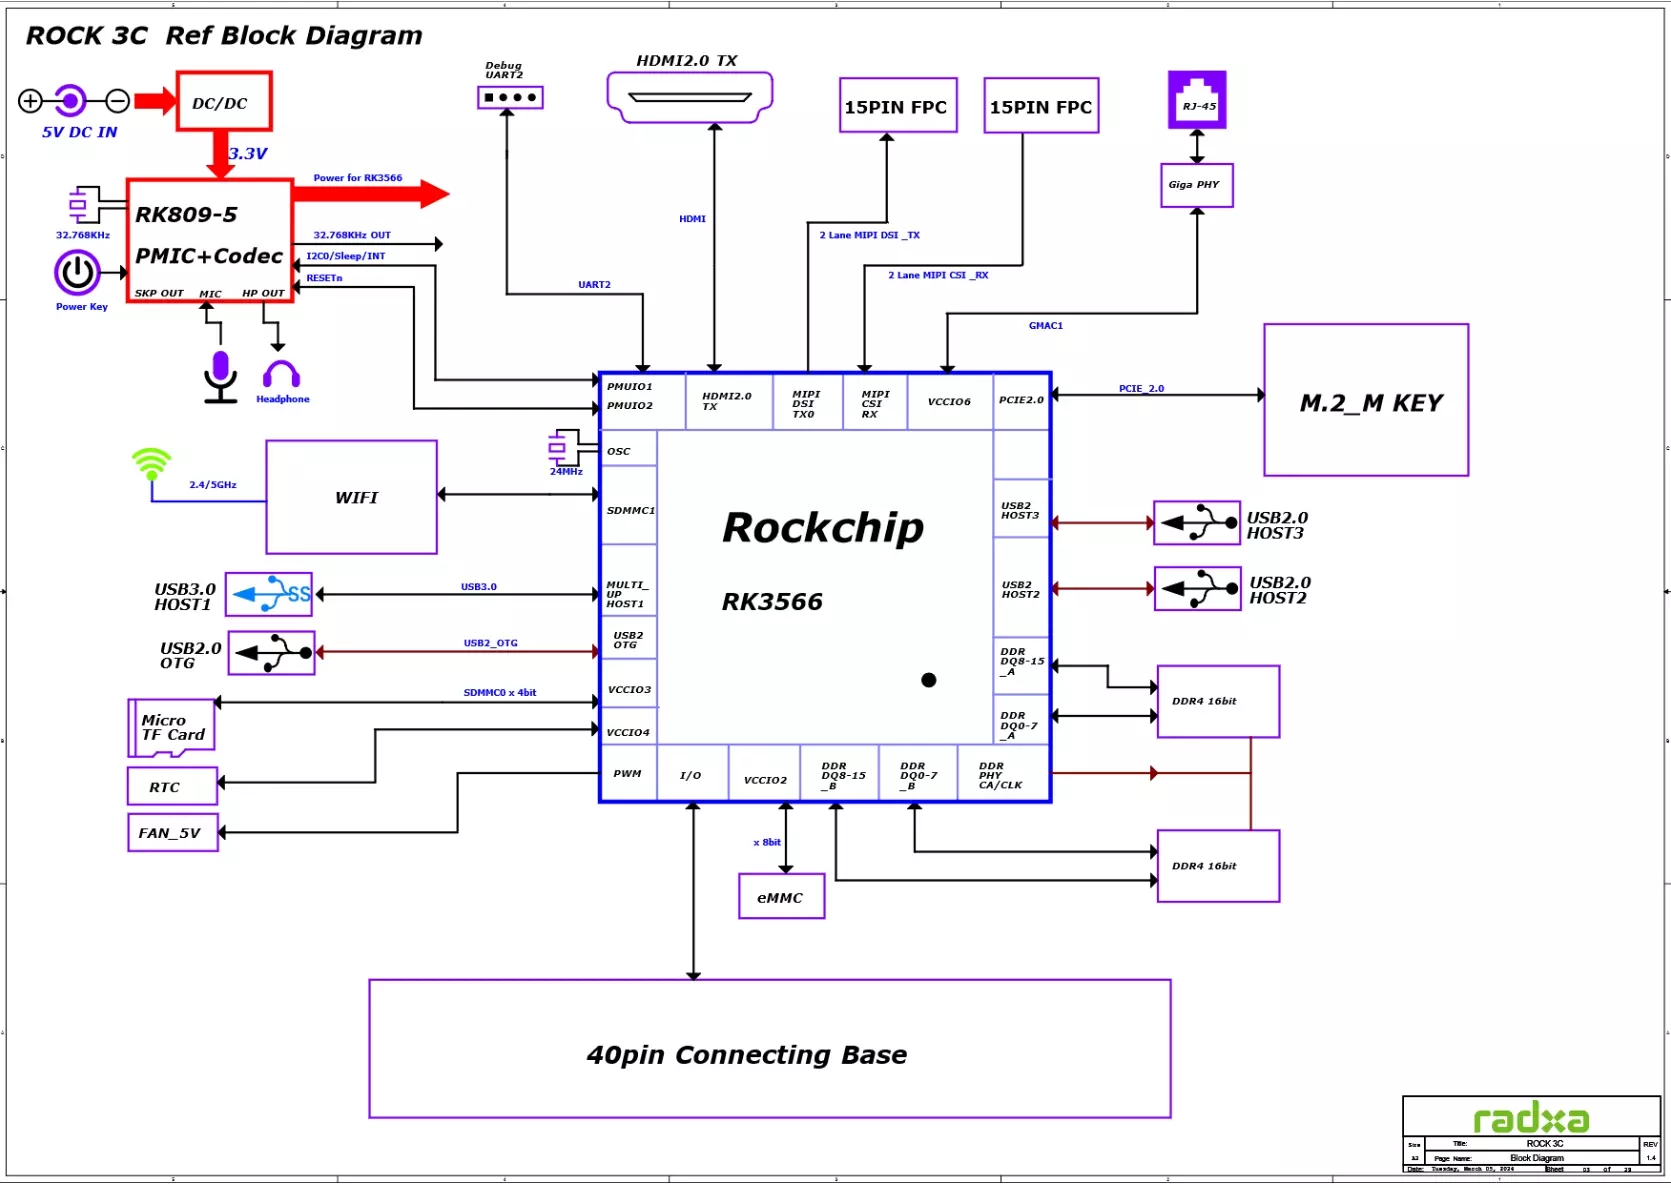 ROCK 3C system block diagram